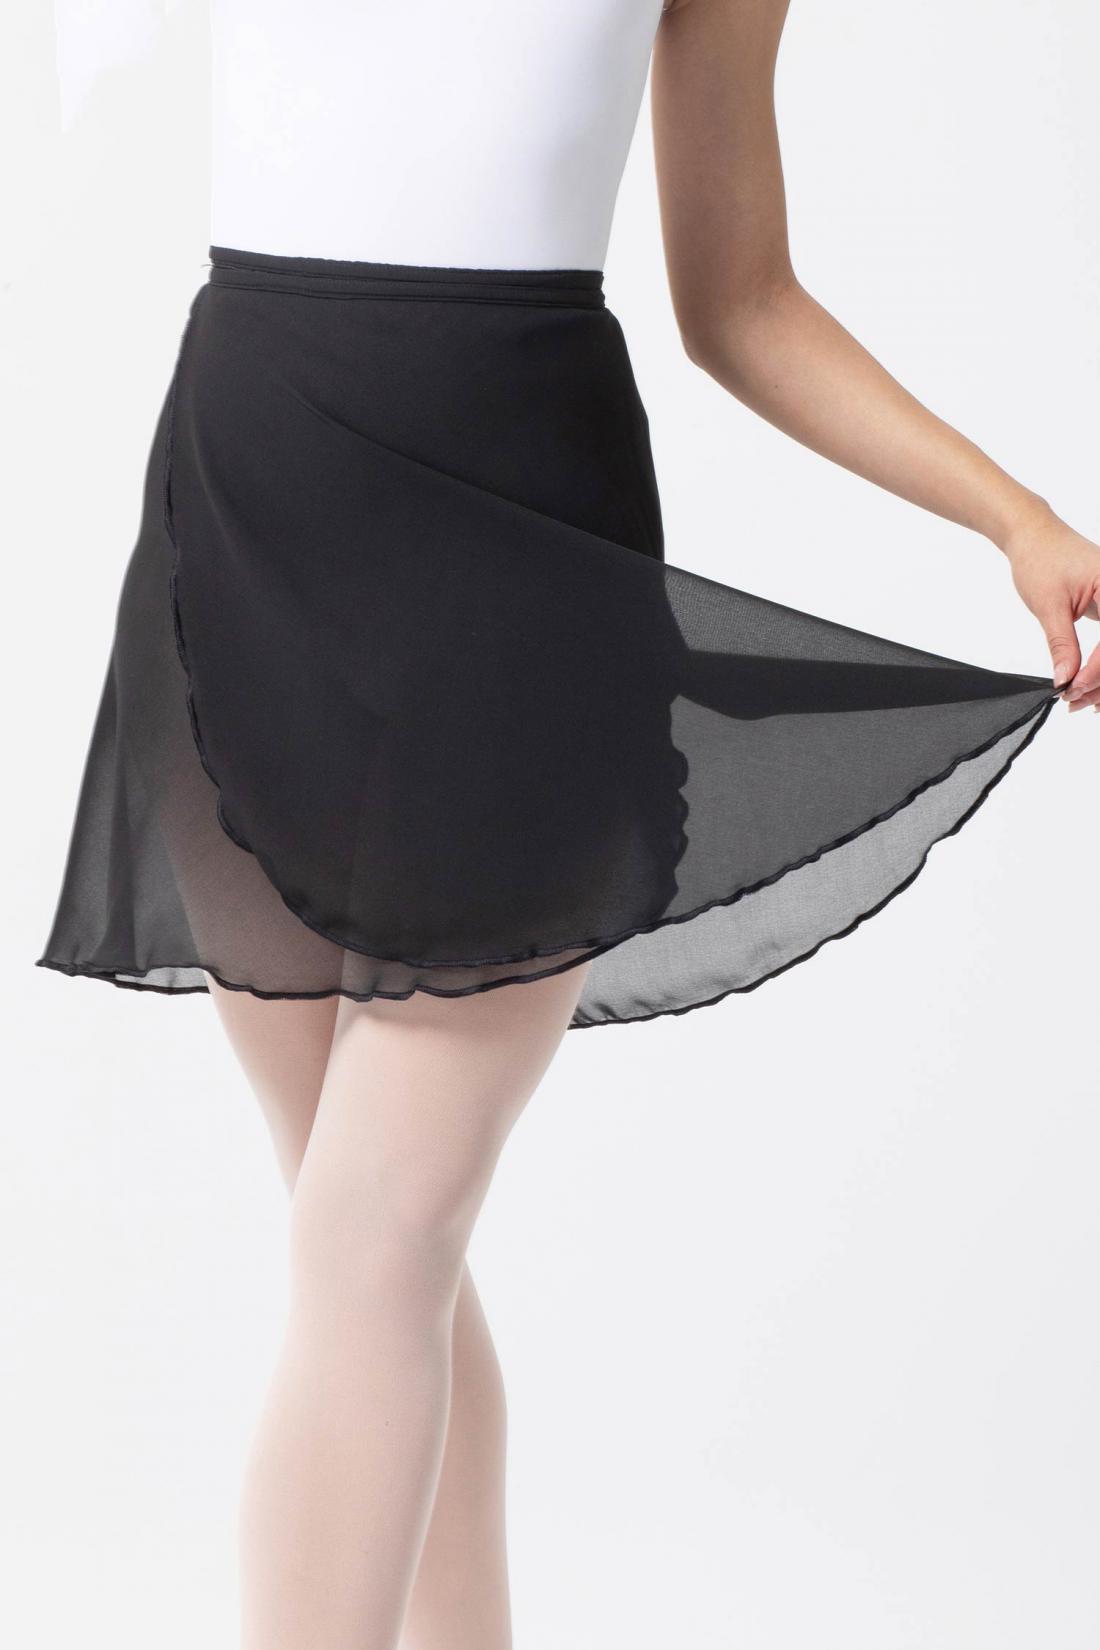 Buy Ballet Tutus & Skirts | Kids Ballet Clothes & Dancewear | Flo Dancewear